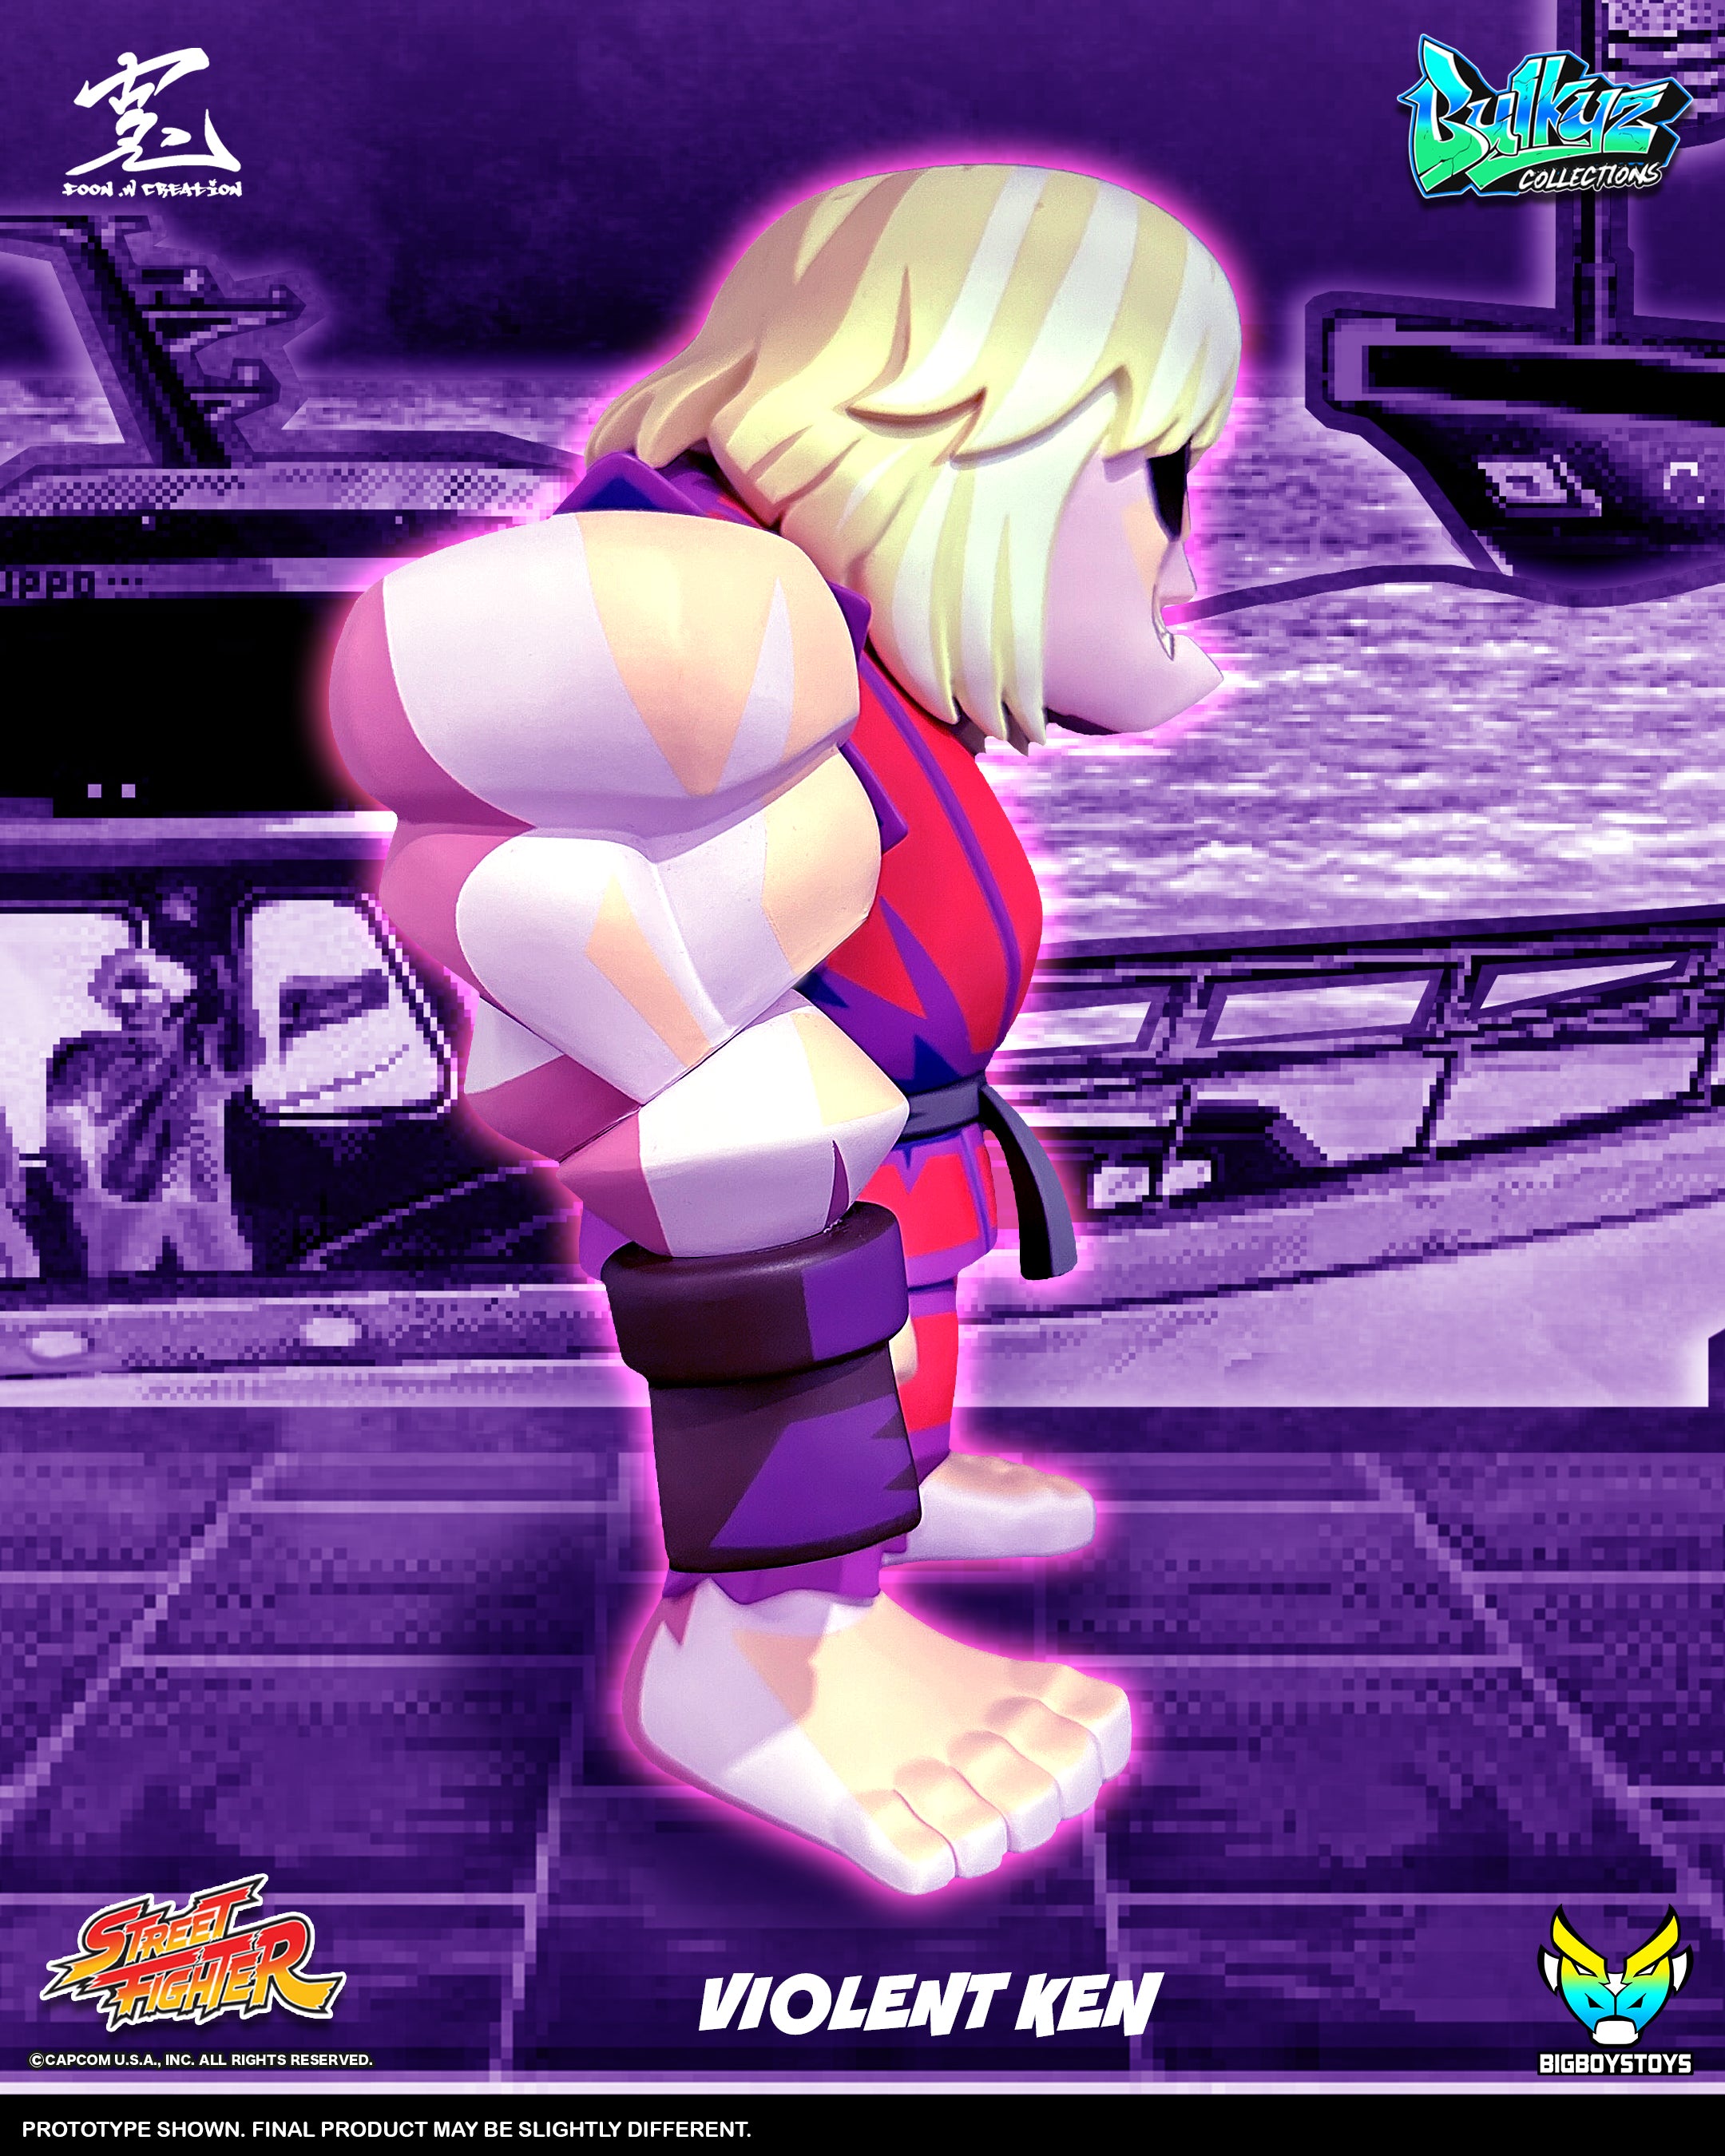 Street Fighter Bulkyz Collections – Violent Ken